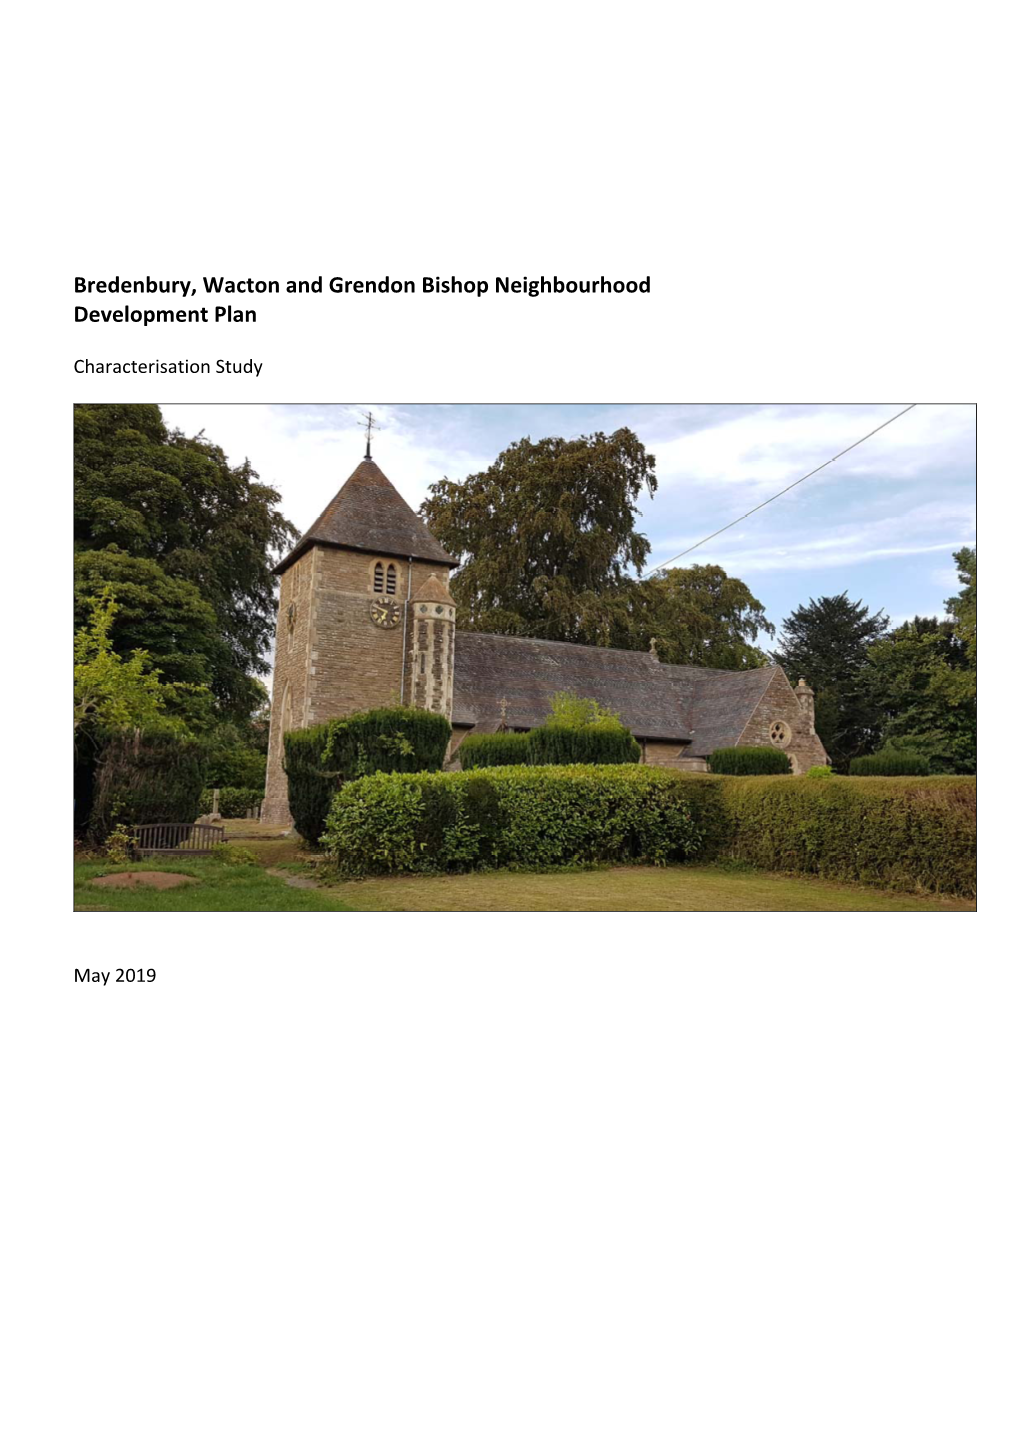 Bredenbury, Wacton & Grendon Bishop Characterisation Study